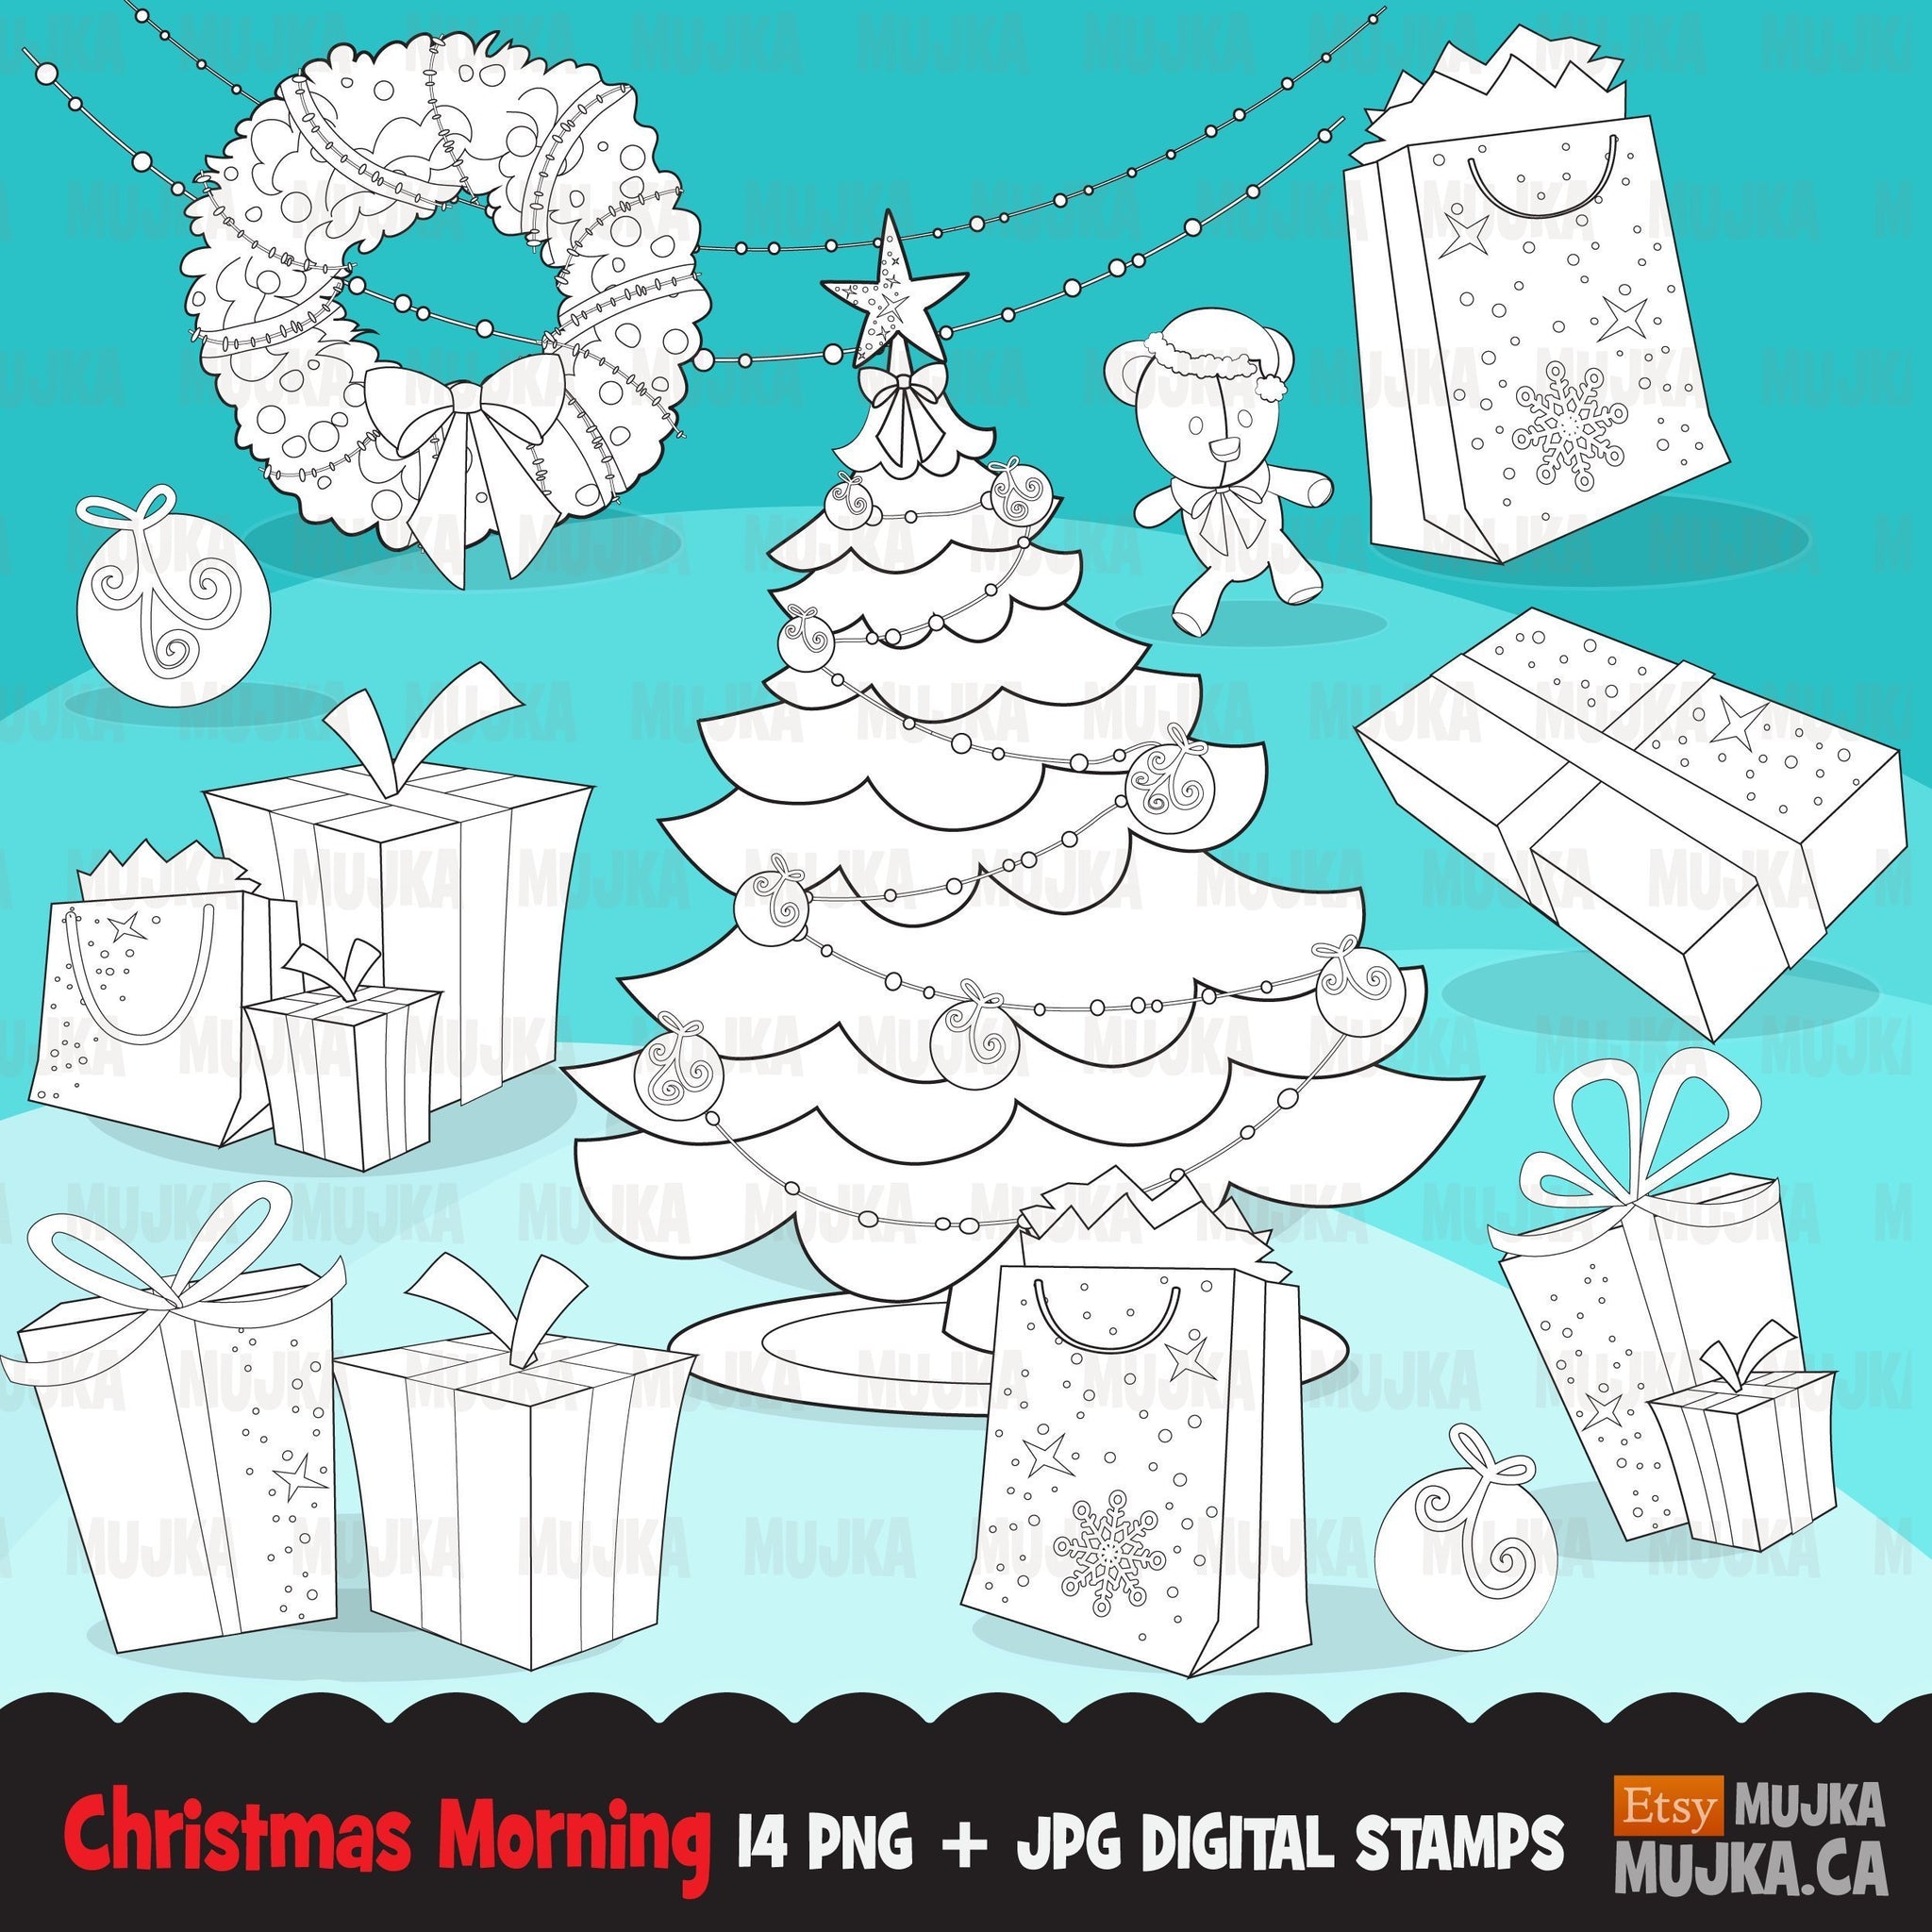 Christmas Morning Digital Stamps